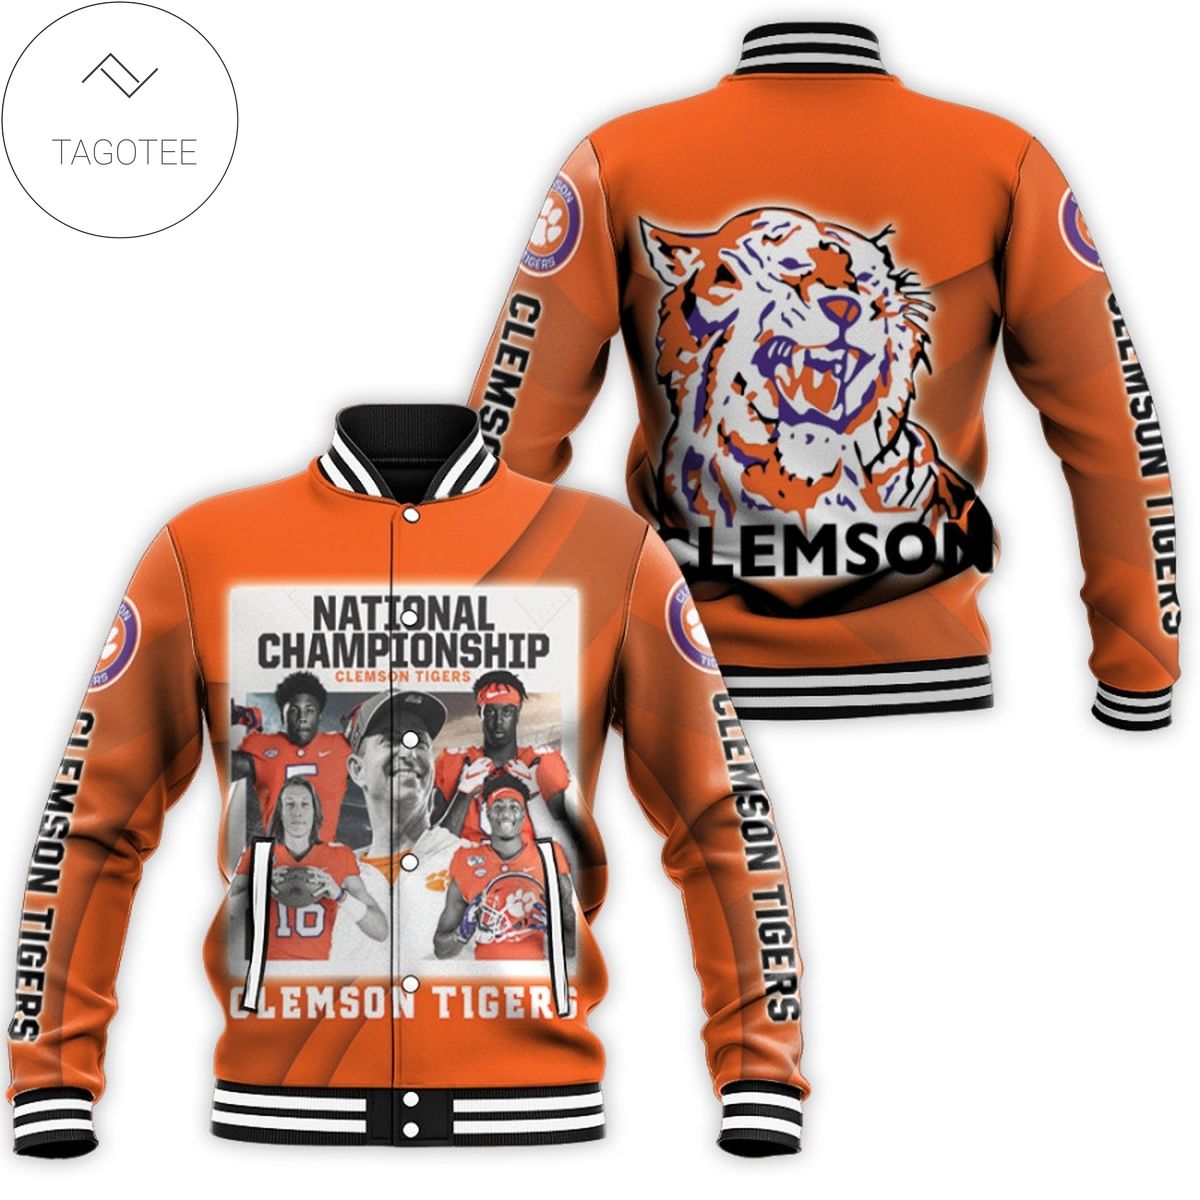 Clemson Tigers 2021 NCAA National Championship The Tiger NFL Gift For Clemson Fans Baseball Jacket